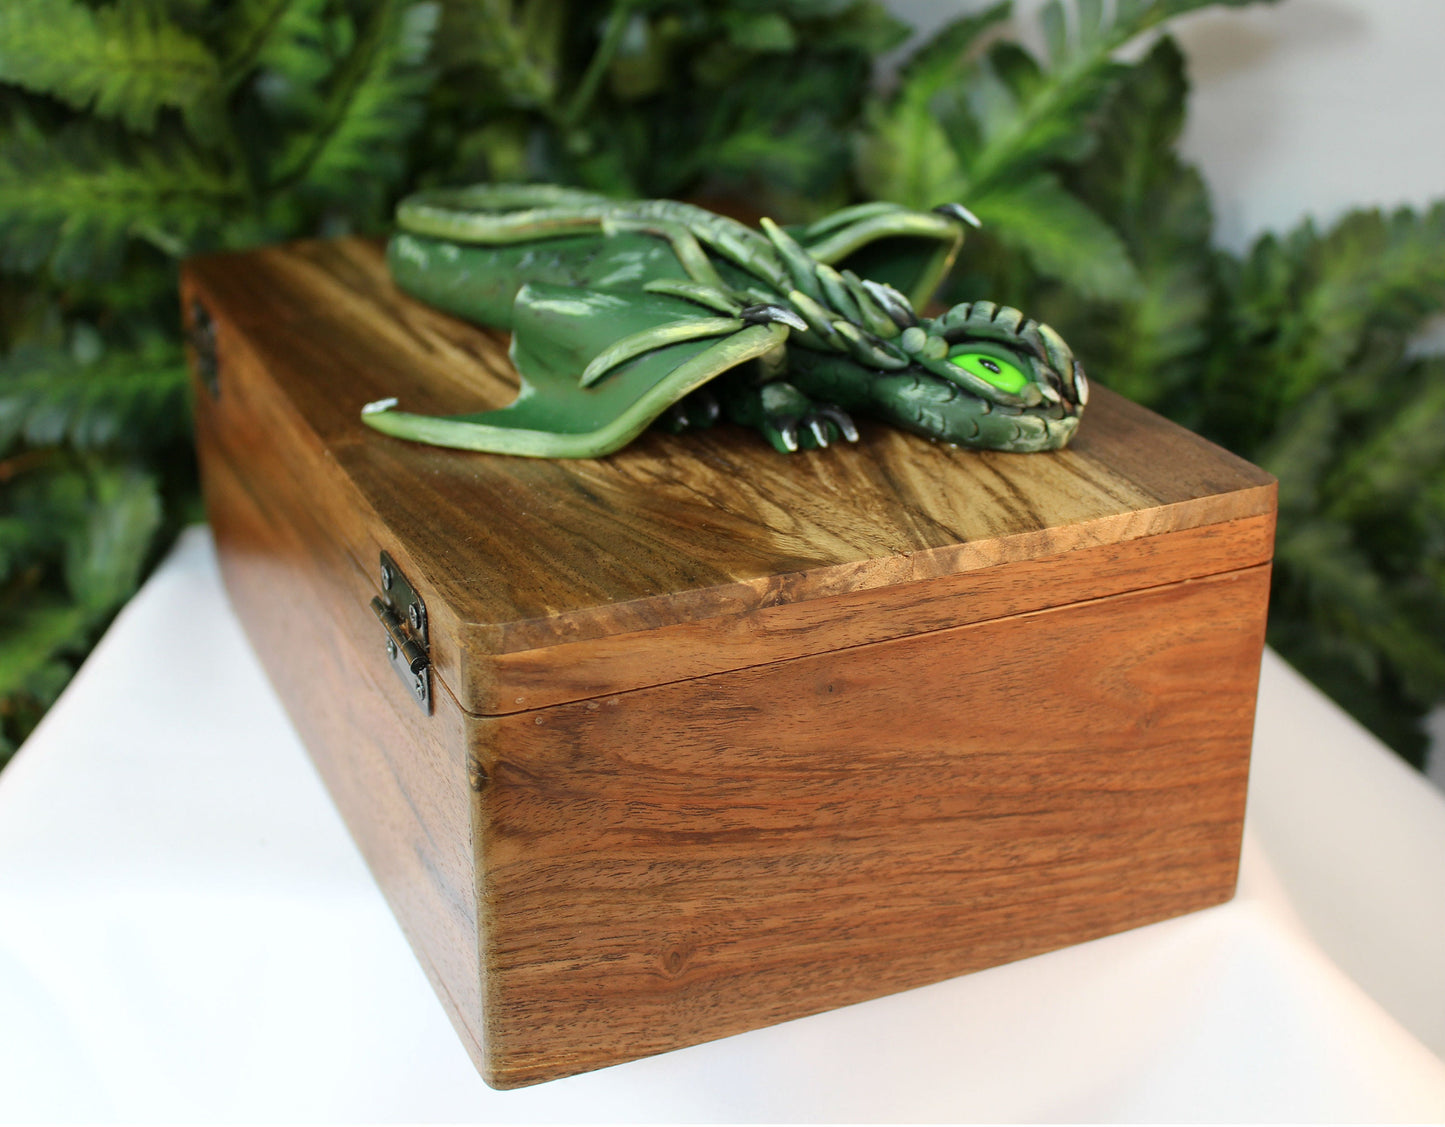 Polymer Clay Green Dragon on Natural Wood Box - 1-086